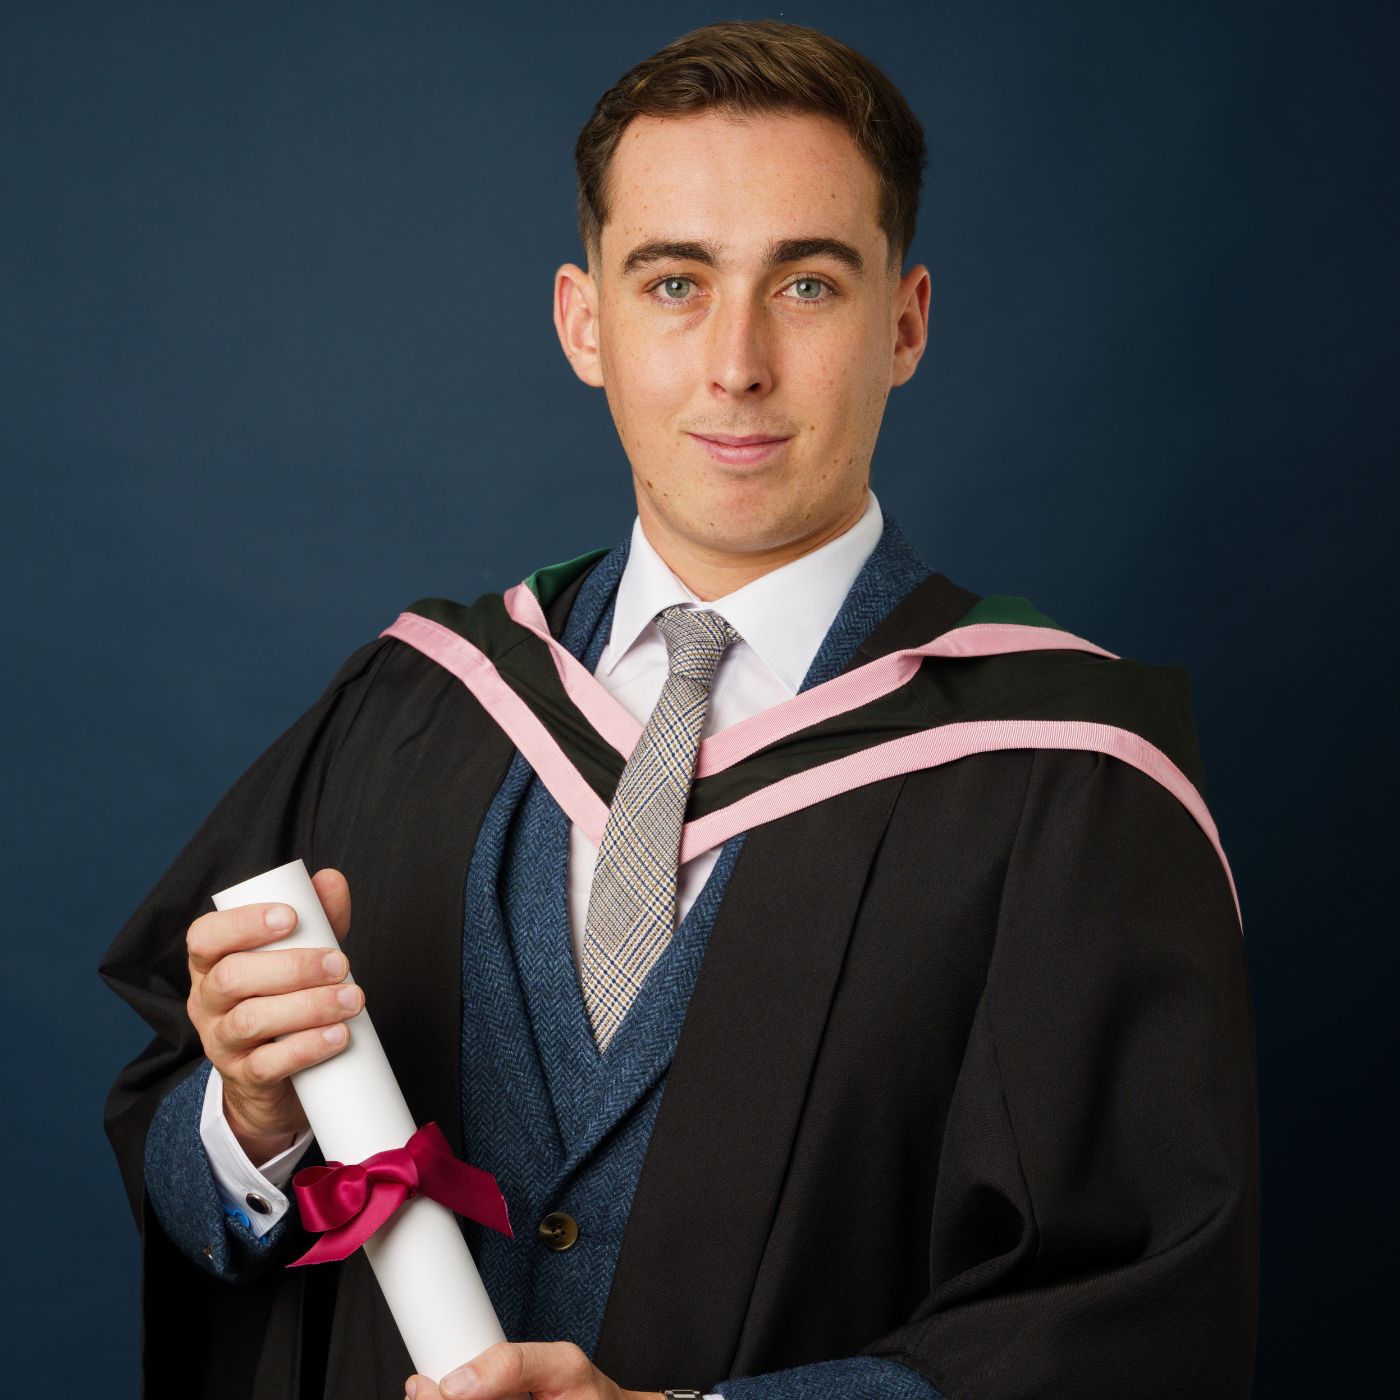 Ulster University Graduation Photograph